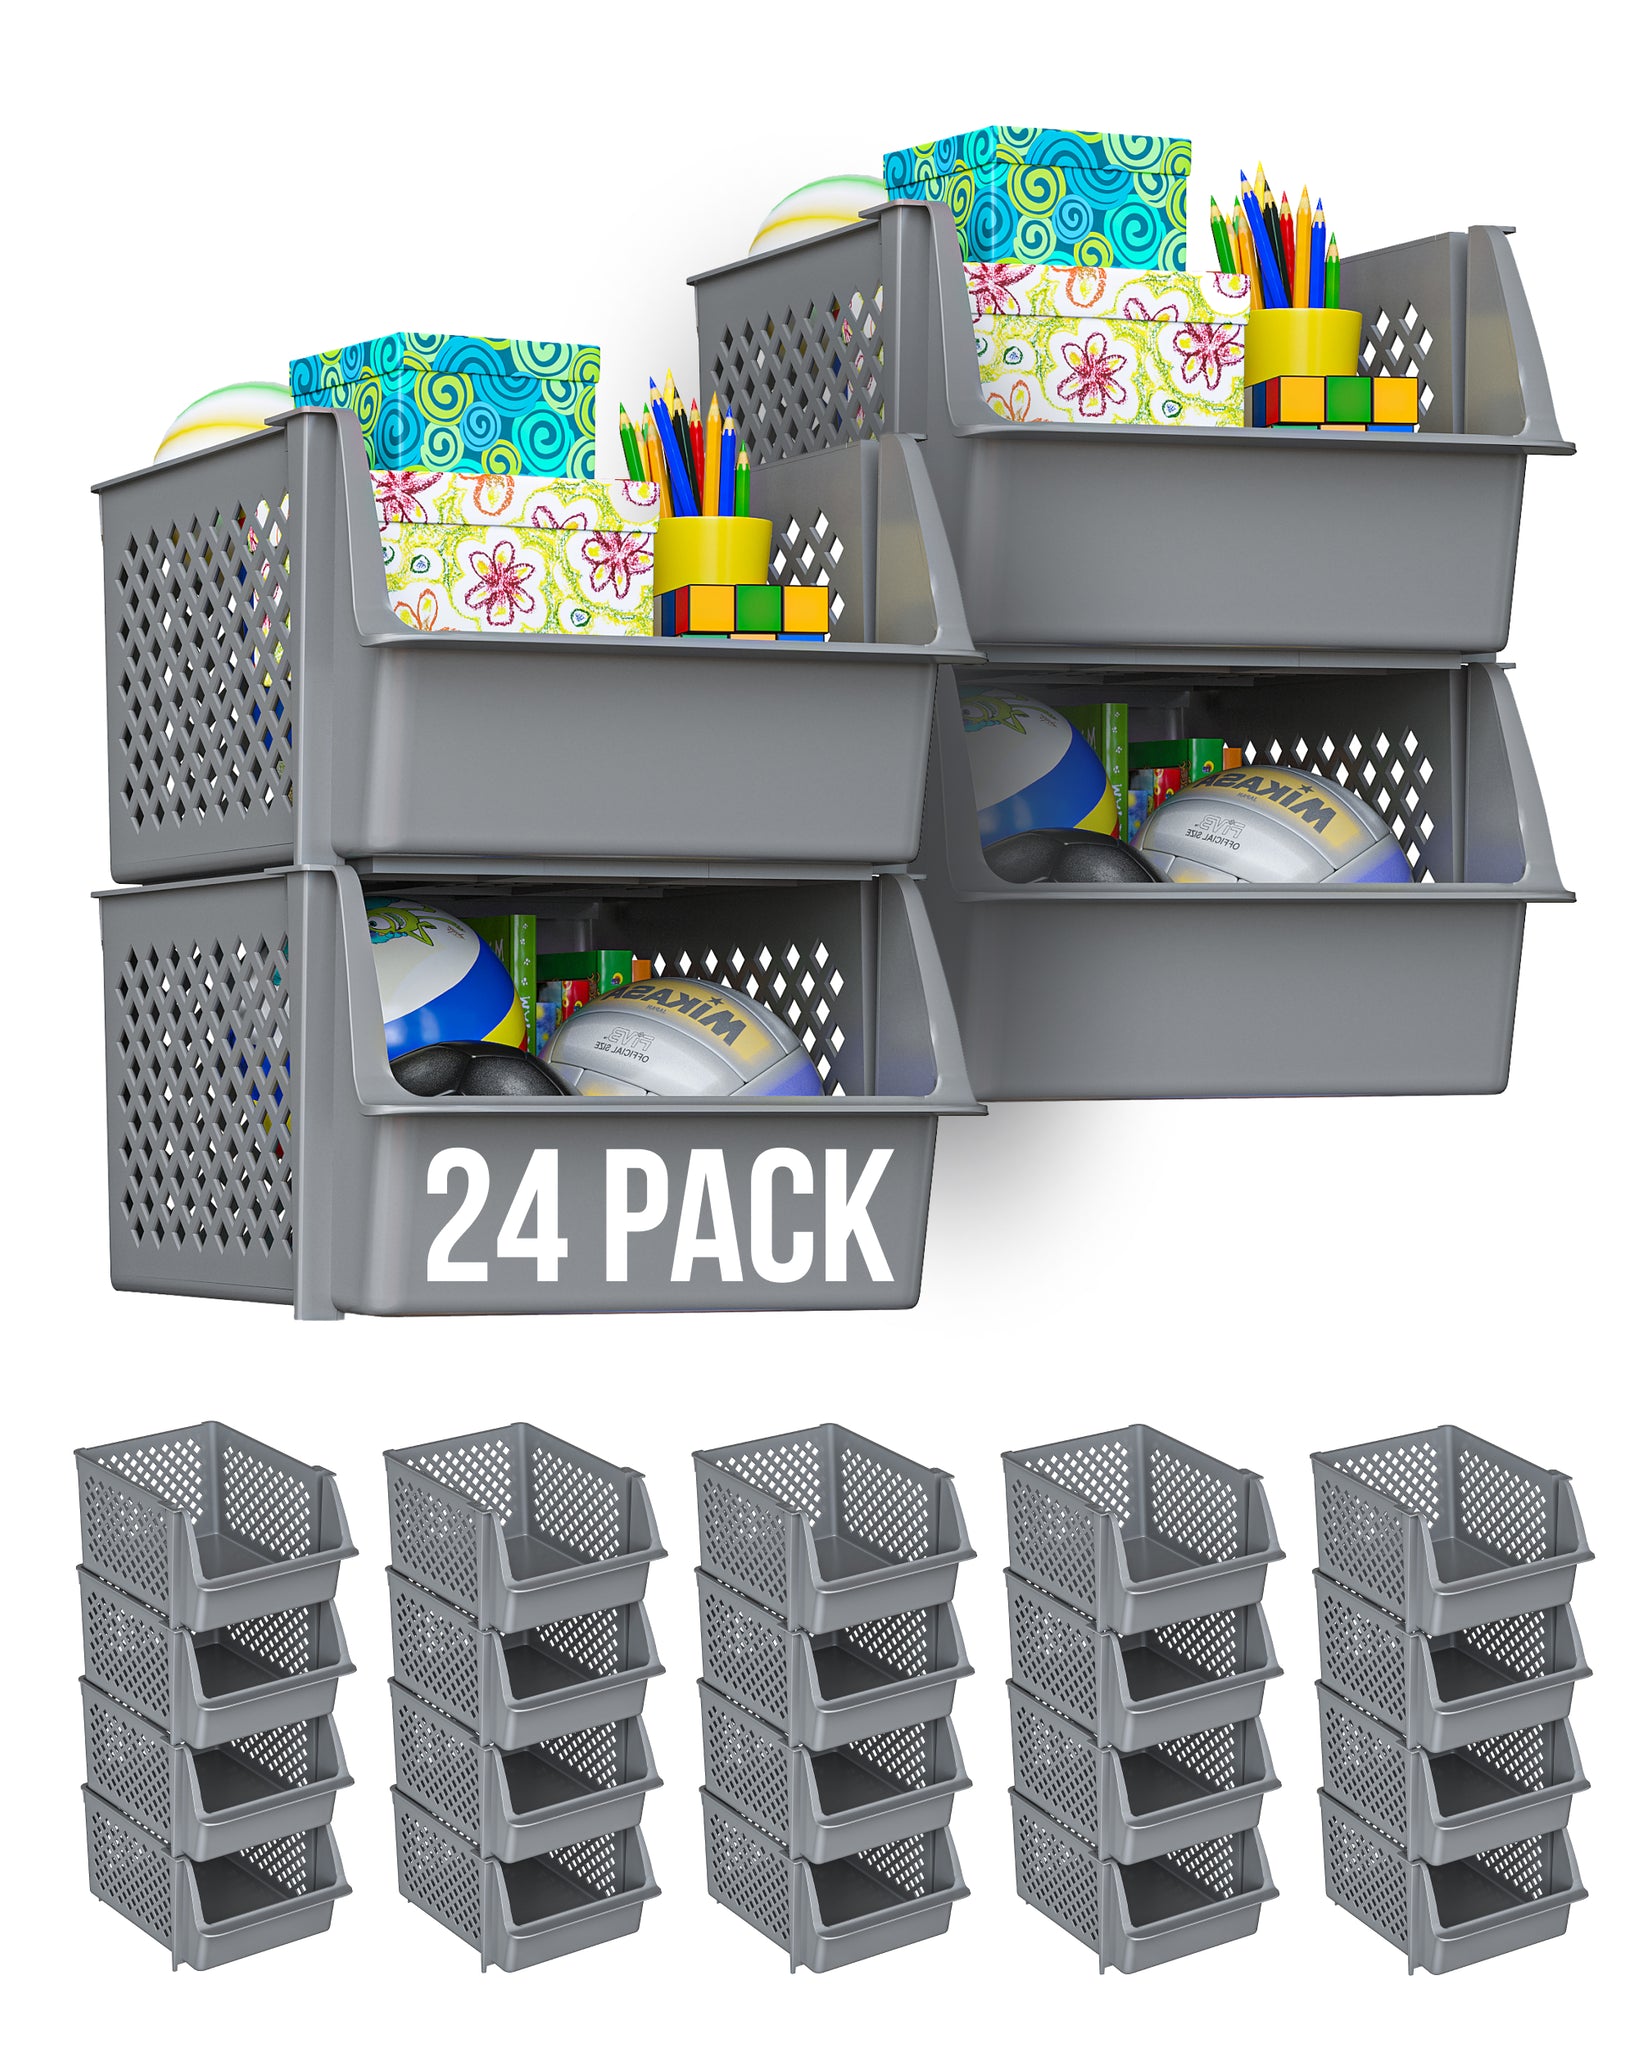 UNiPLAY Large Stackable Storage Bins, Pink (4-Pack)